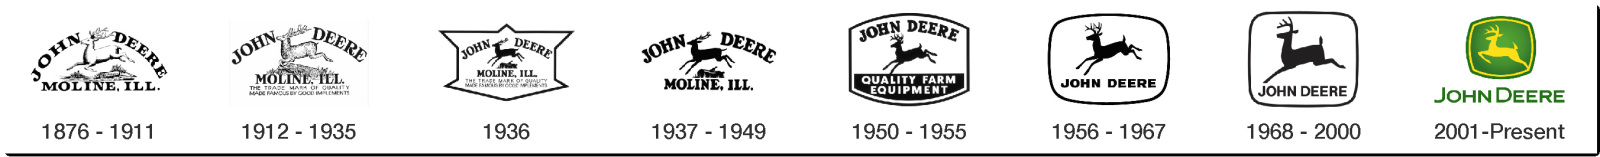 John Deere Logos